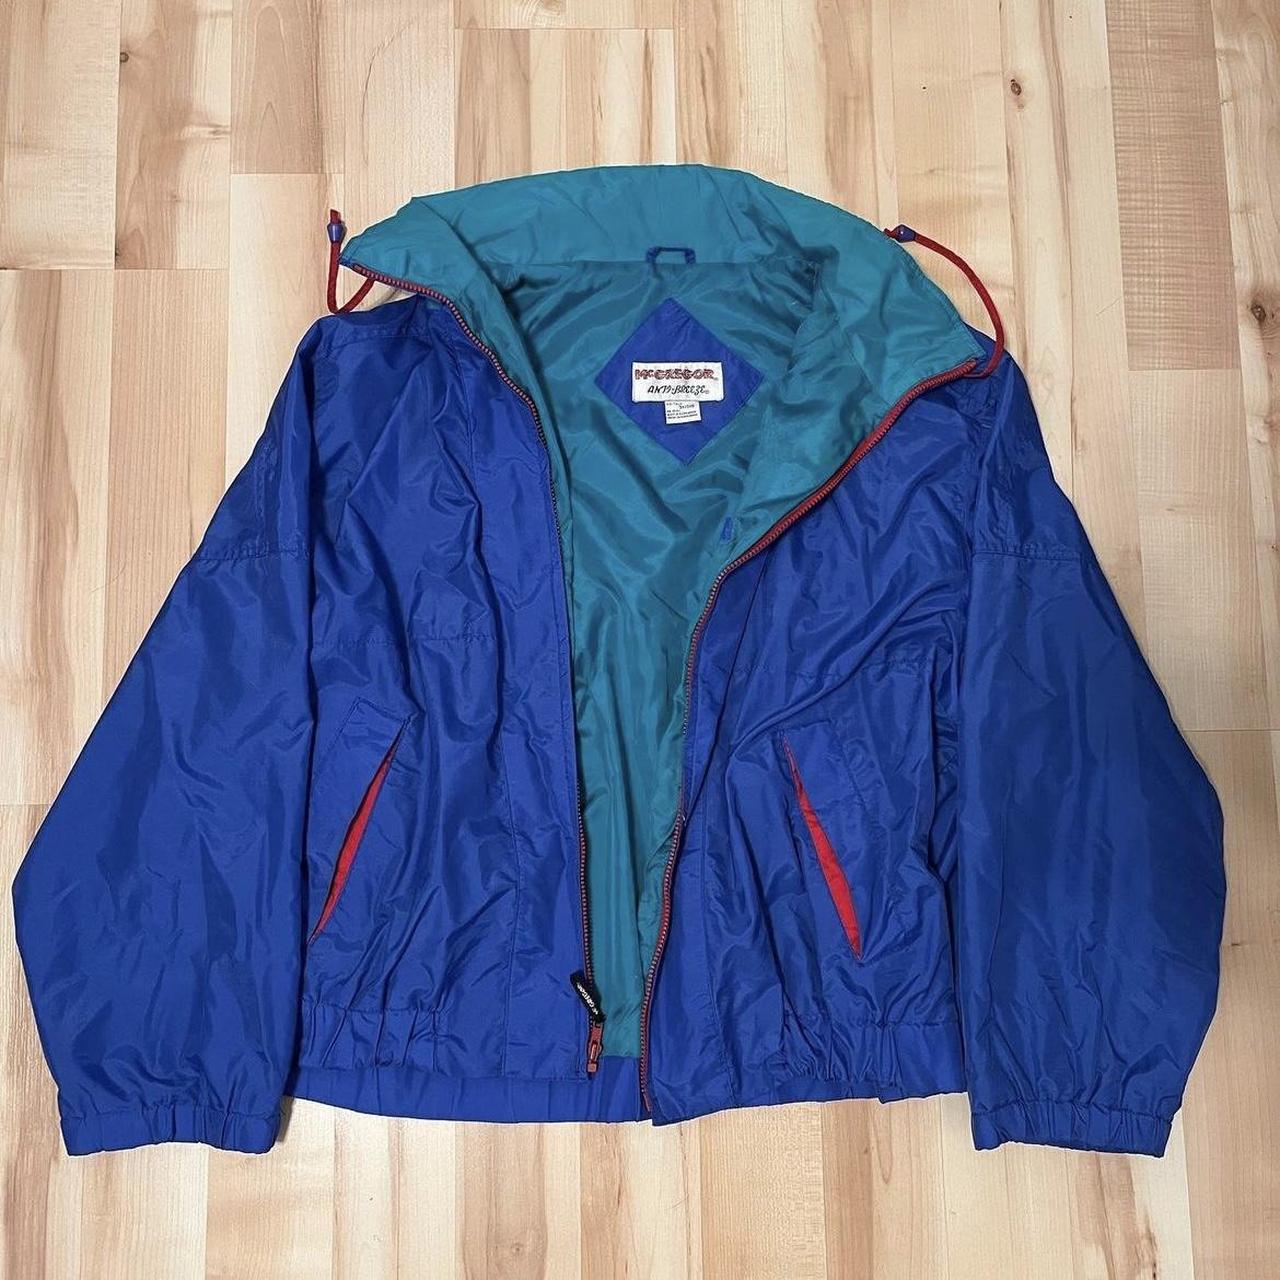 Vintage Mcgregor Jacket, ➖ Size: 3XL but definitely...